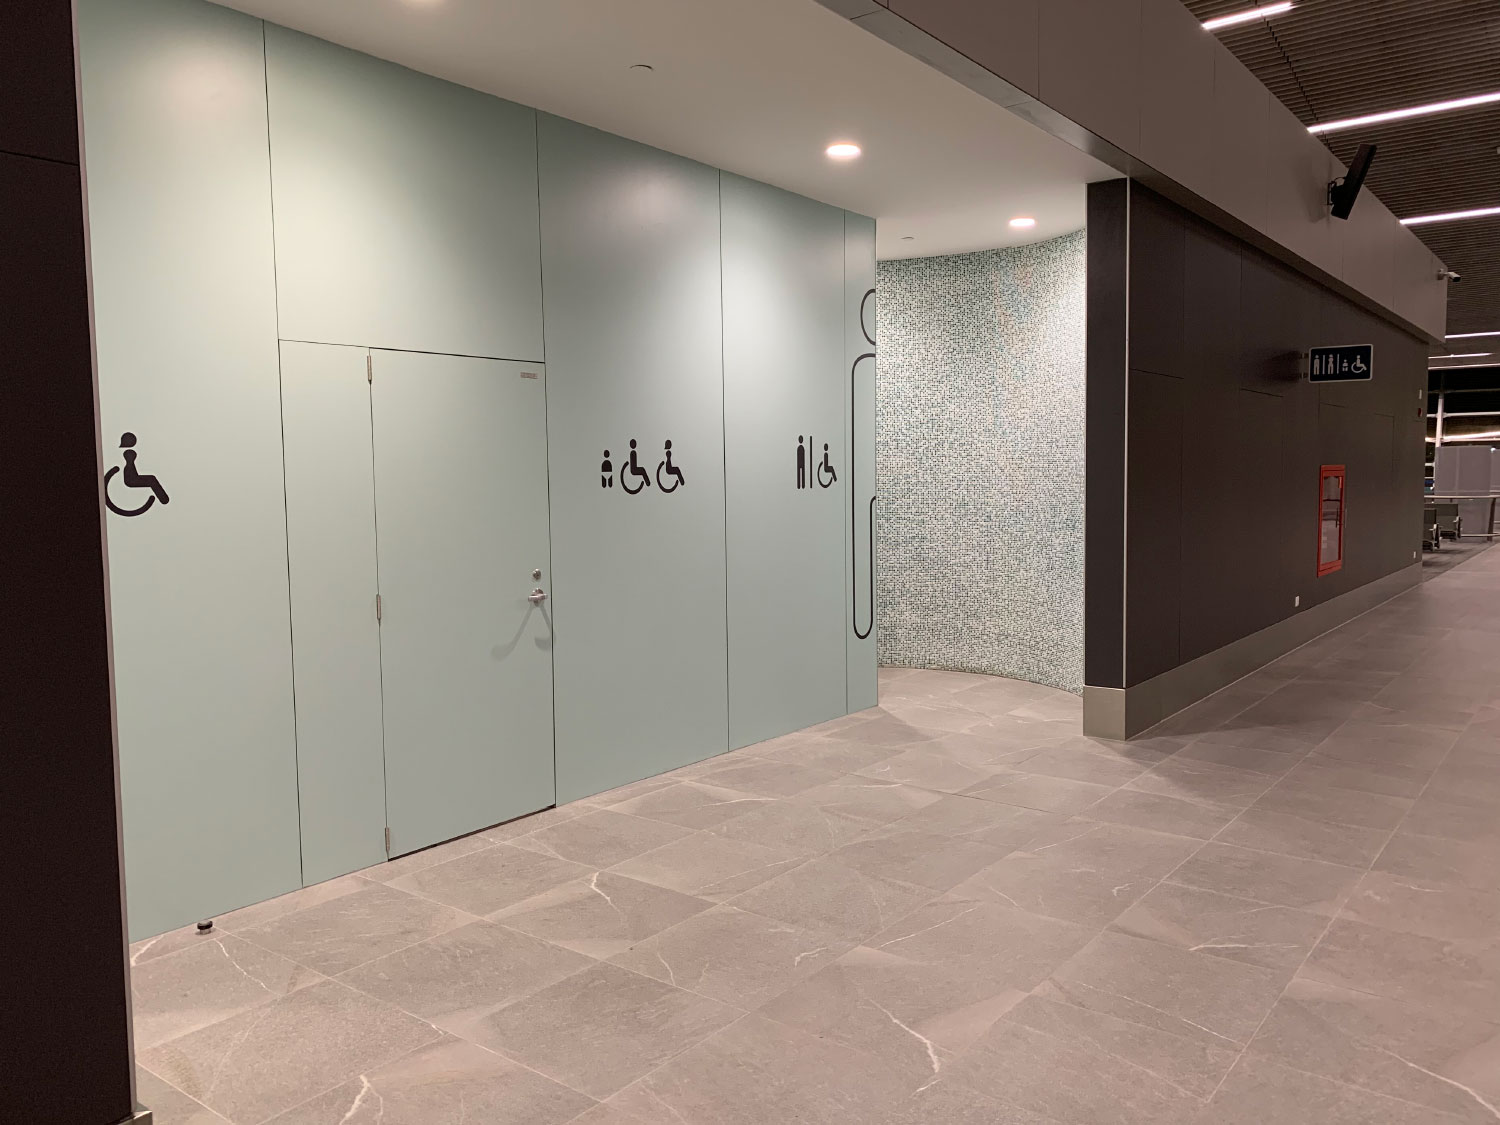 Airport bathroom entrance with Fundermax phenolic panels